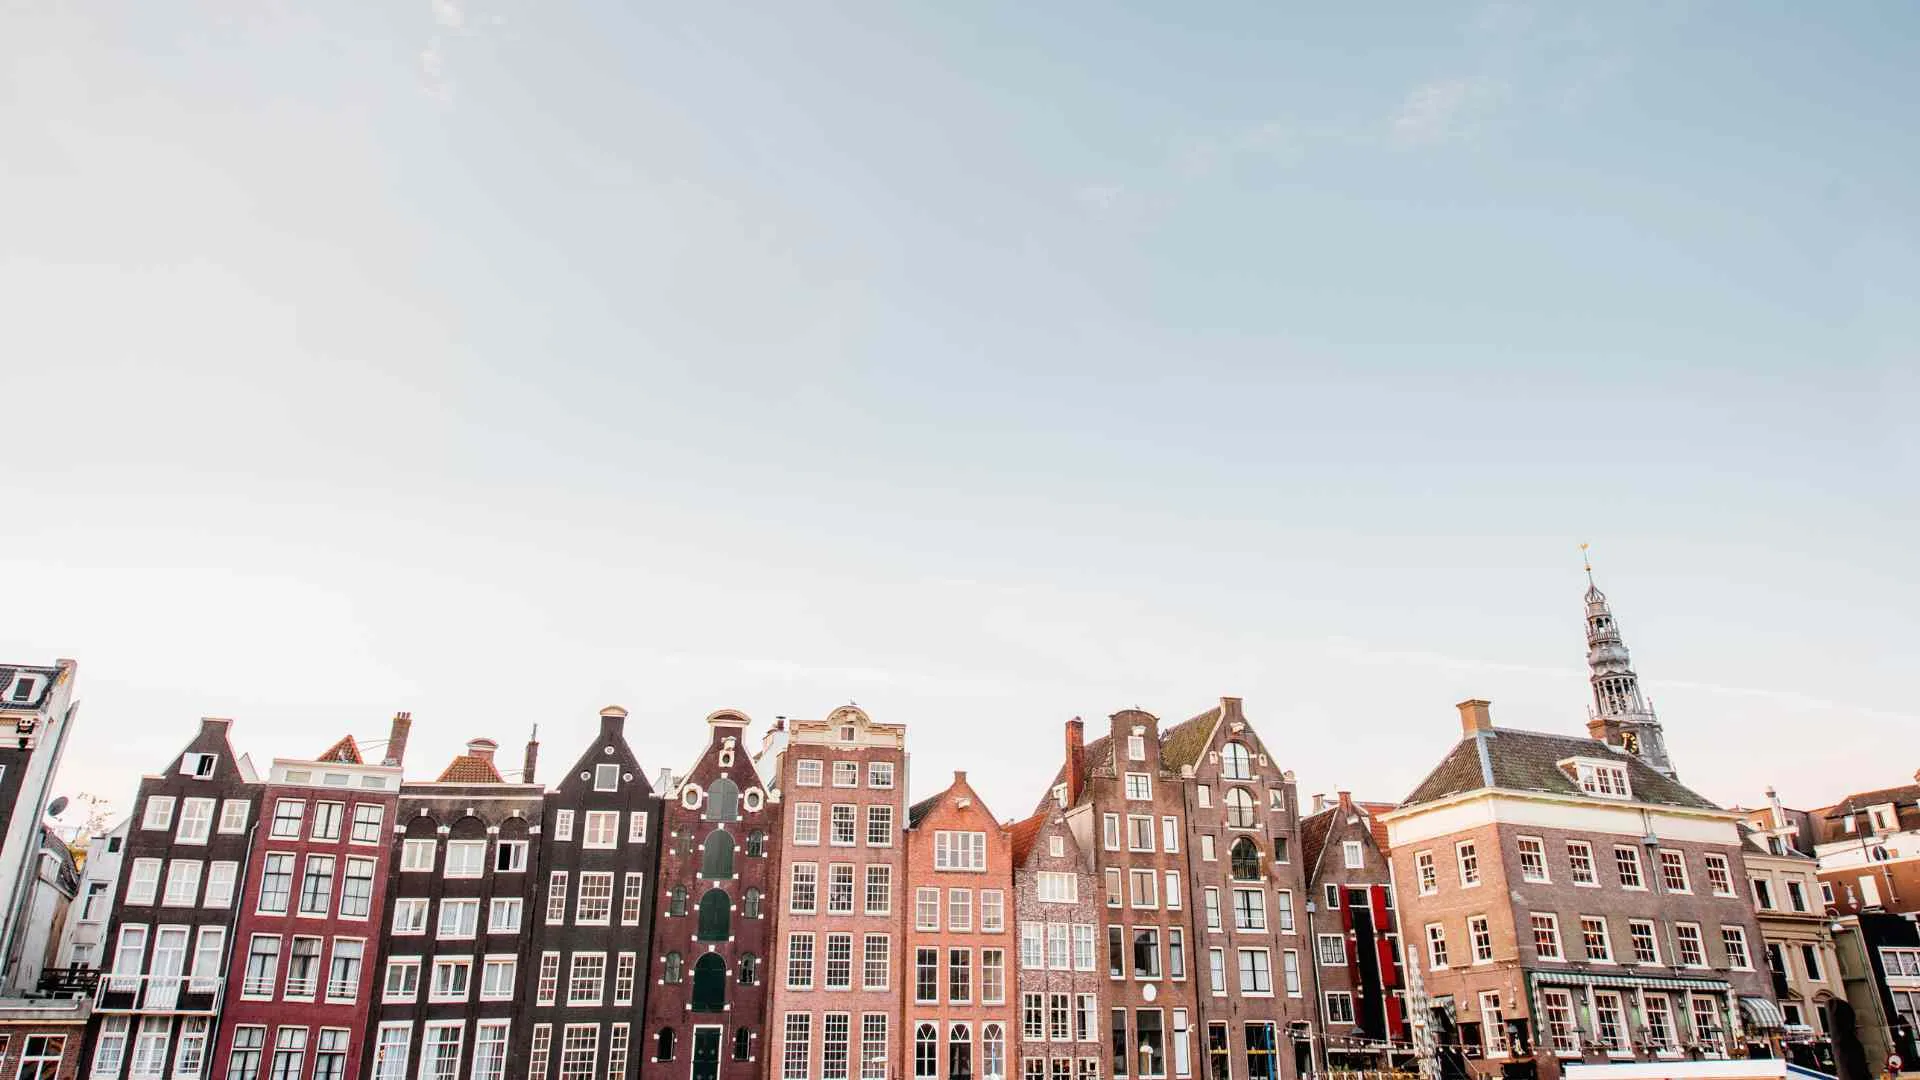 Amsterdam accommodations